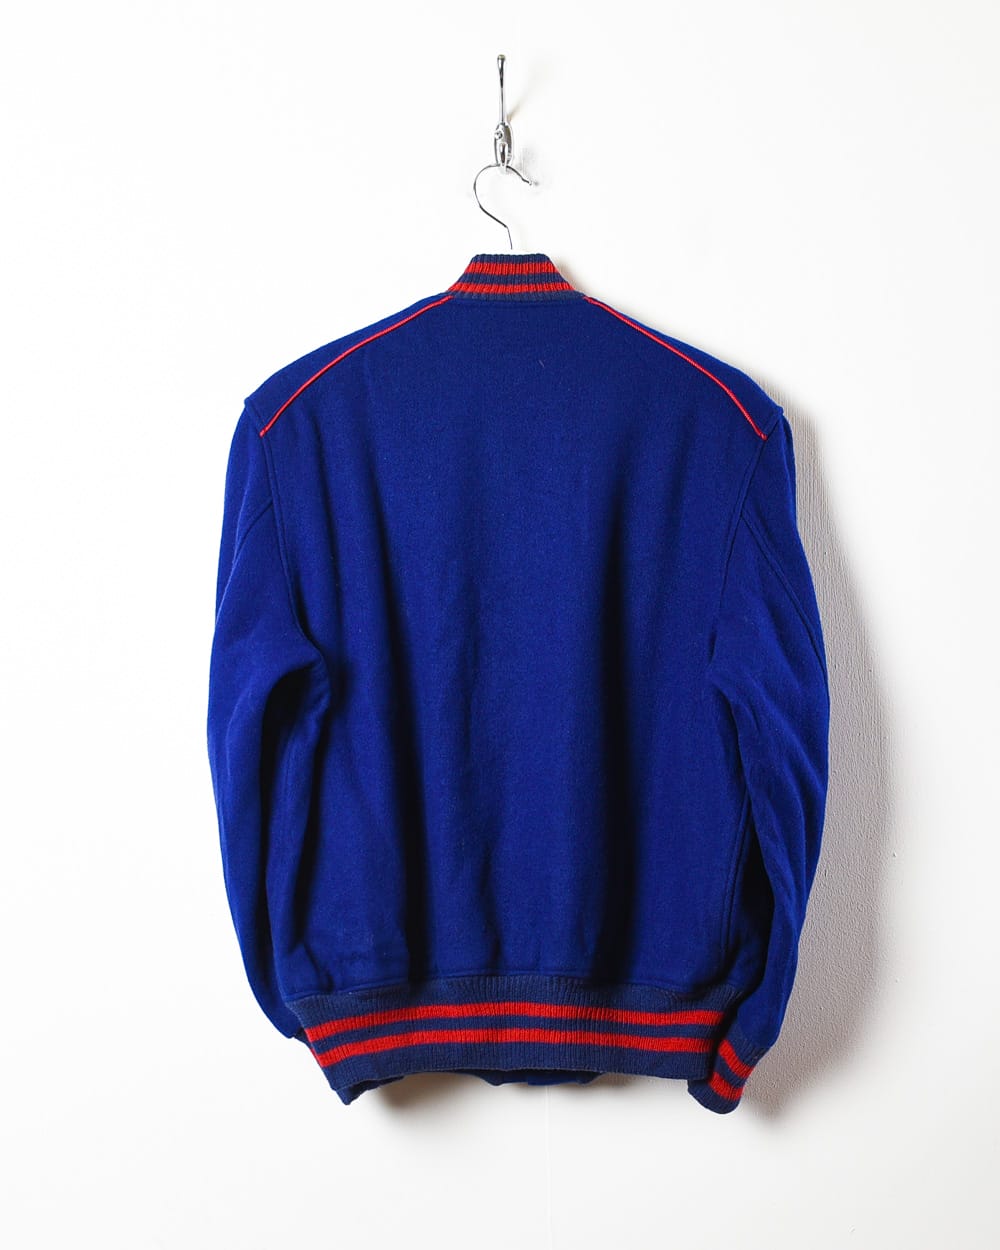 Blue Vintage Wool Bomber Jacket - Small